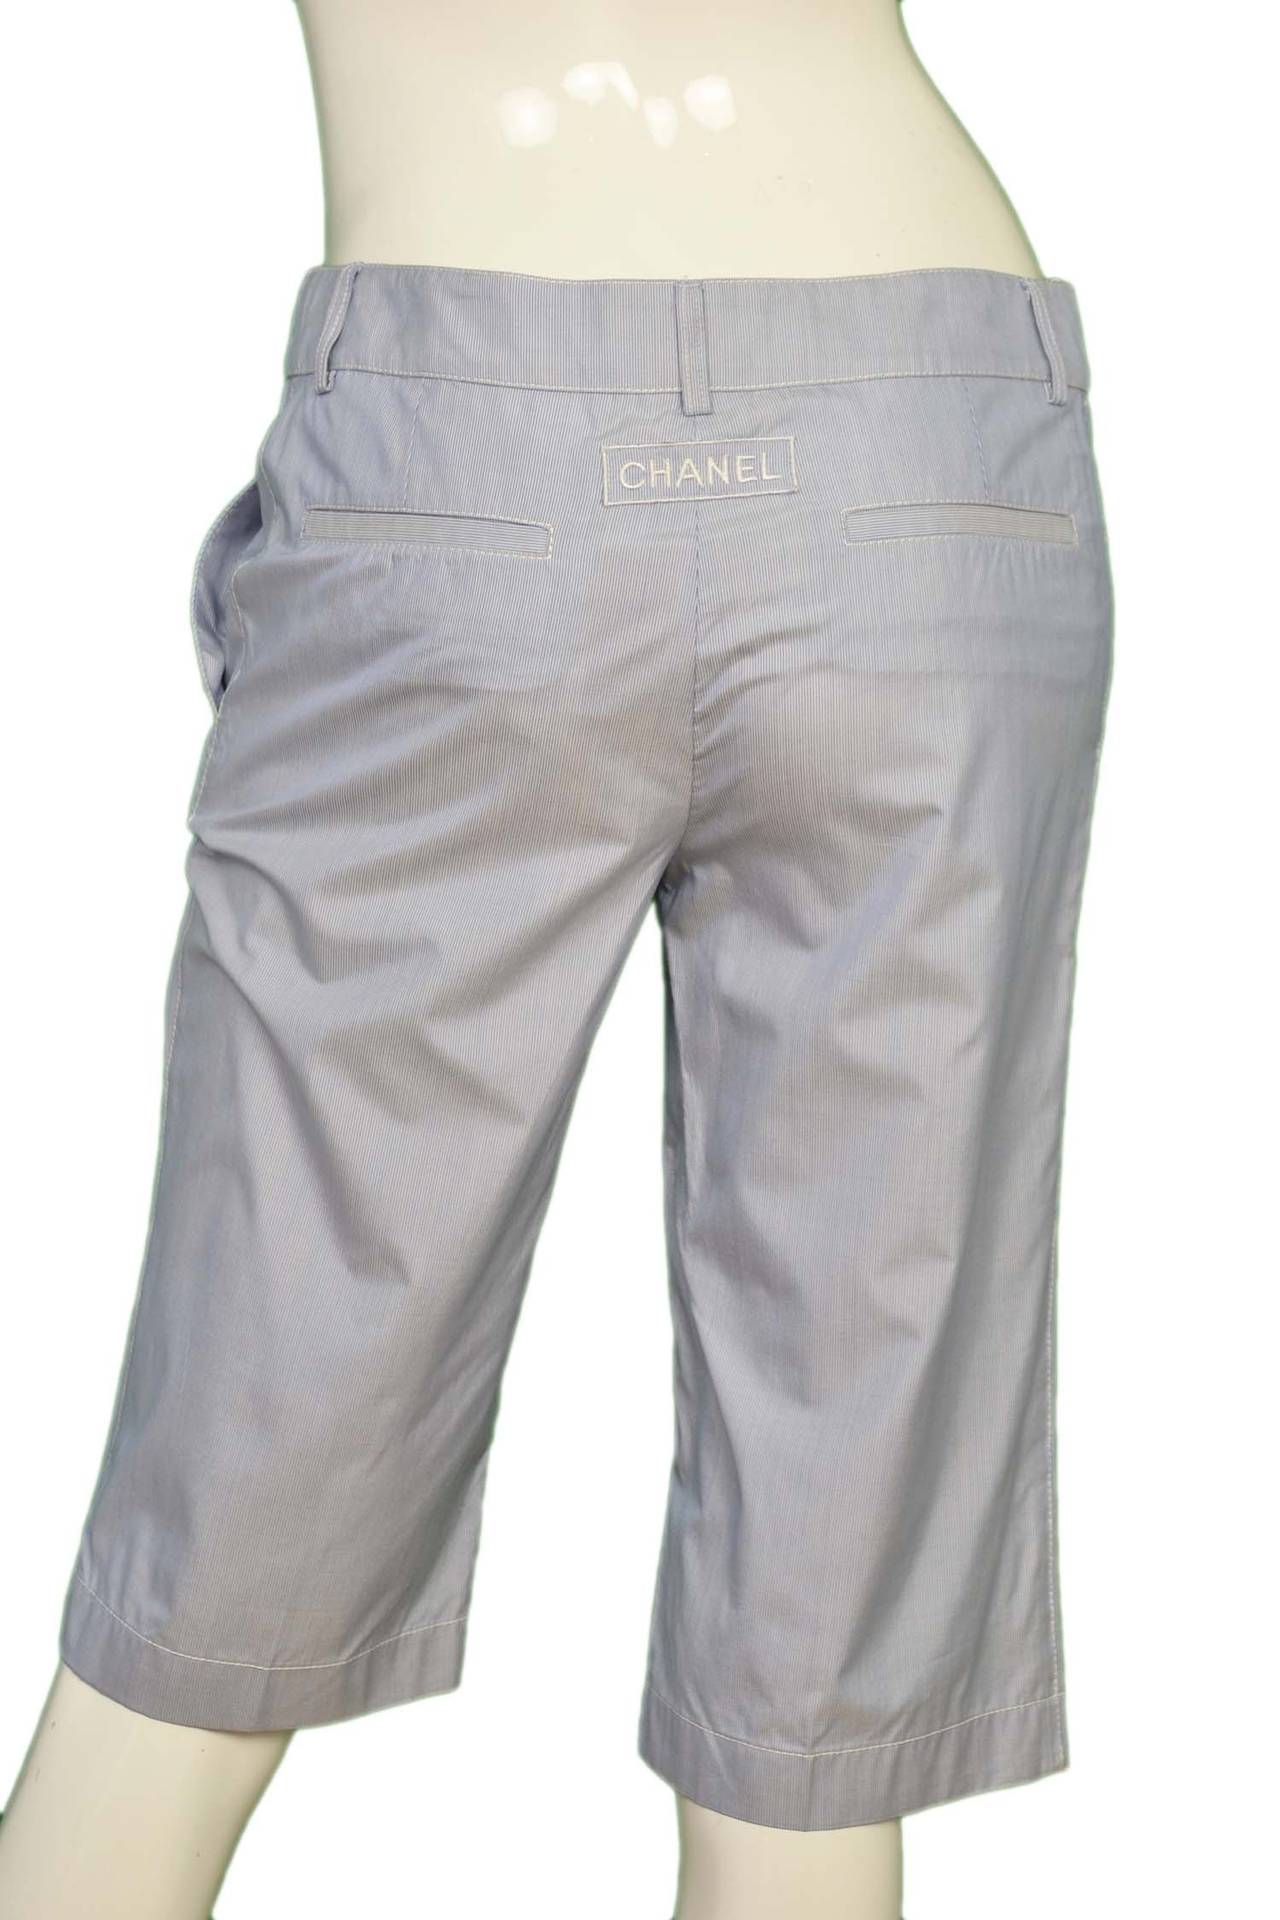 Gray CHANEL Pinstripe Long Shorts sz. 38